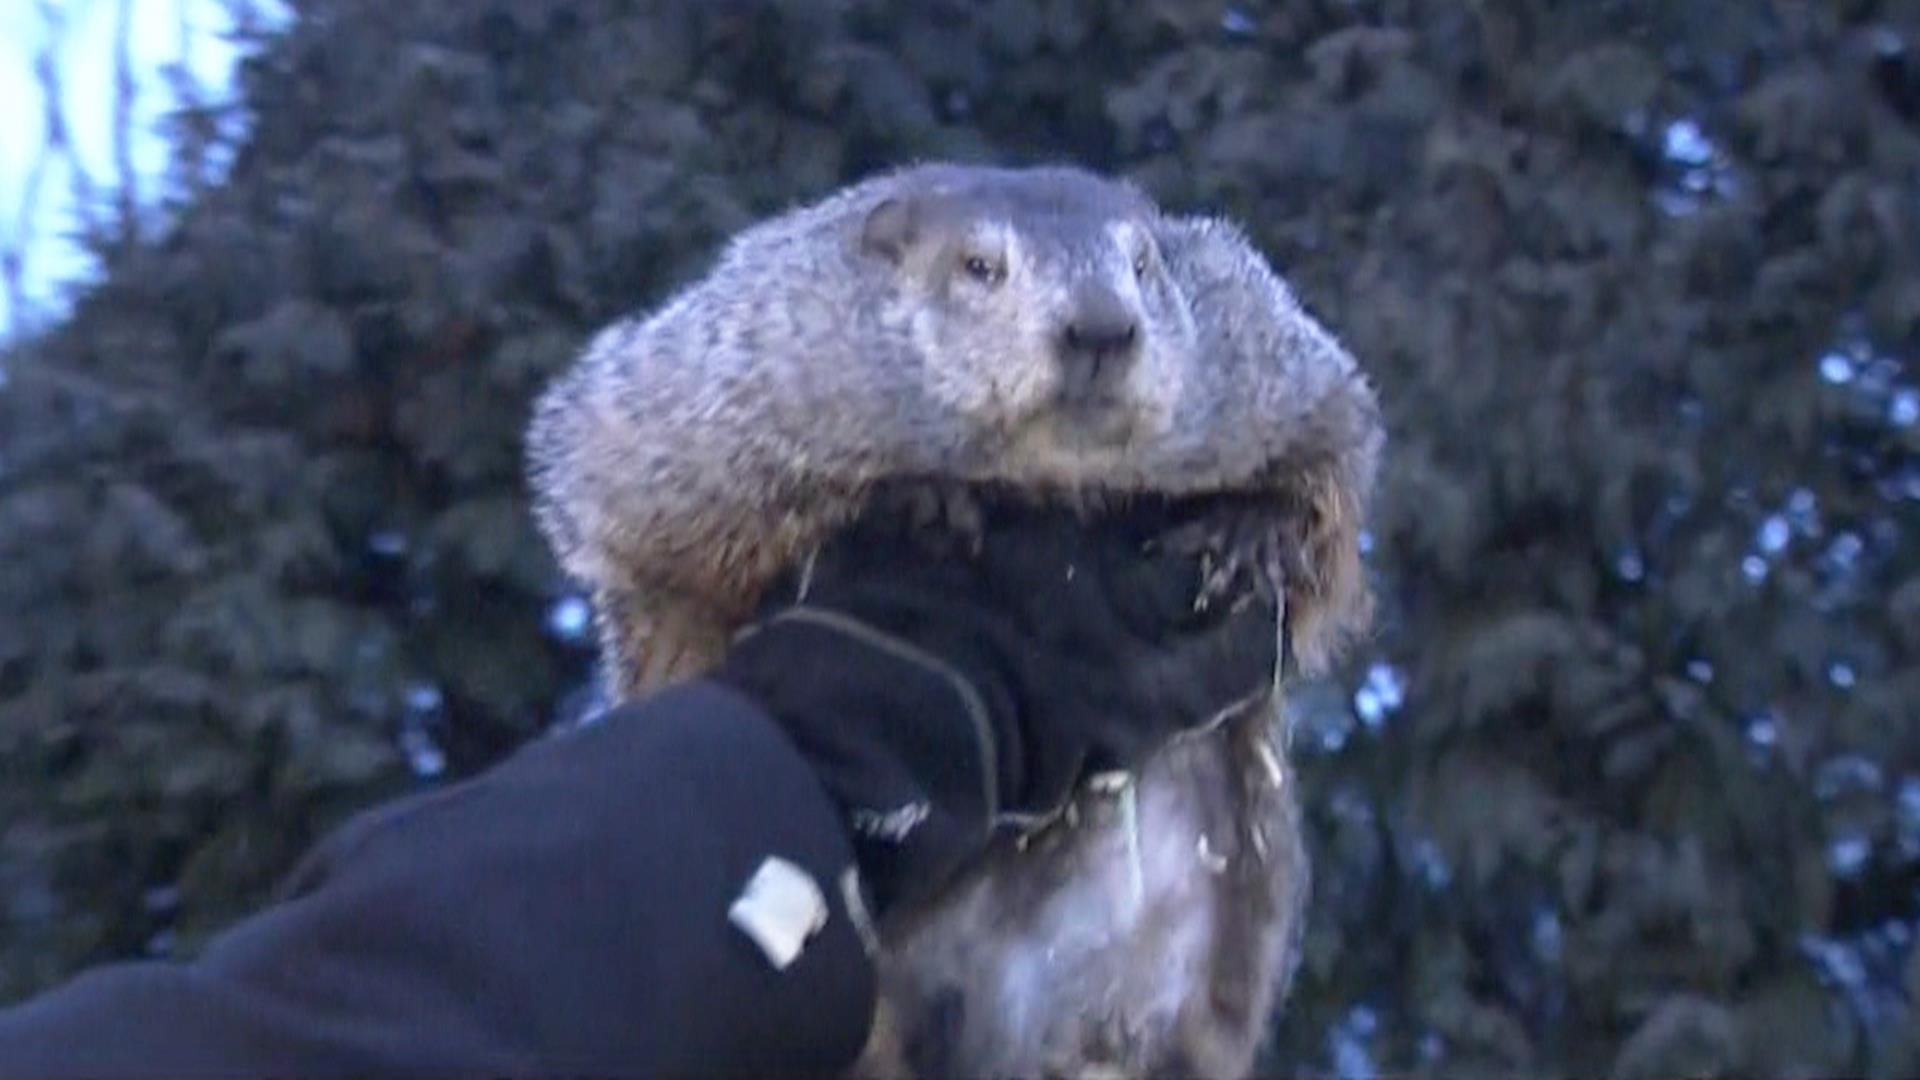 Groundhog Day: Punxsutawney Phil predicts 6 more weeks of winter